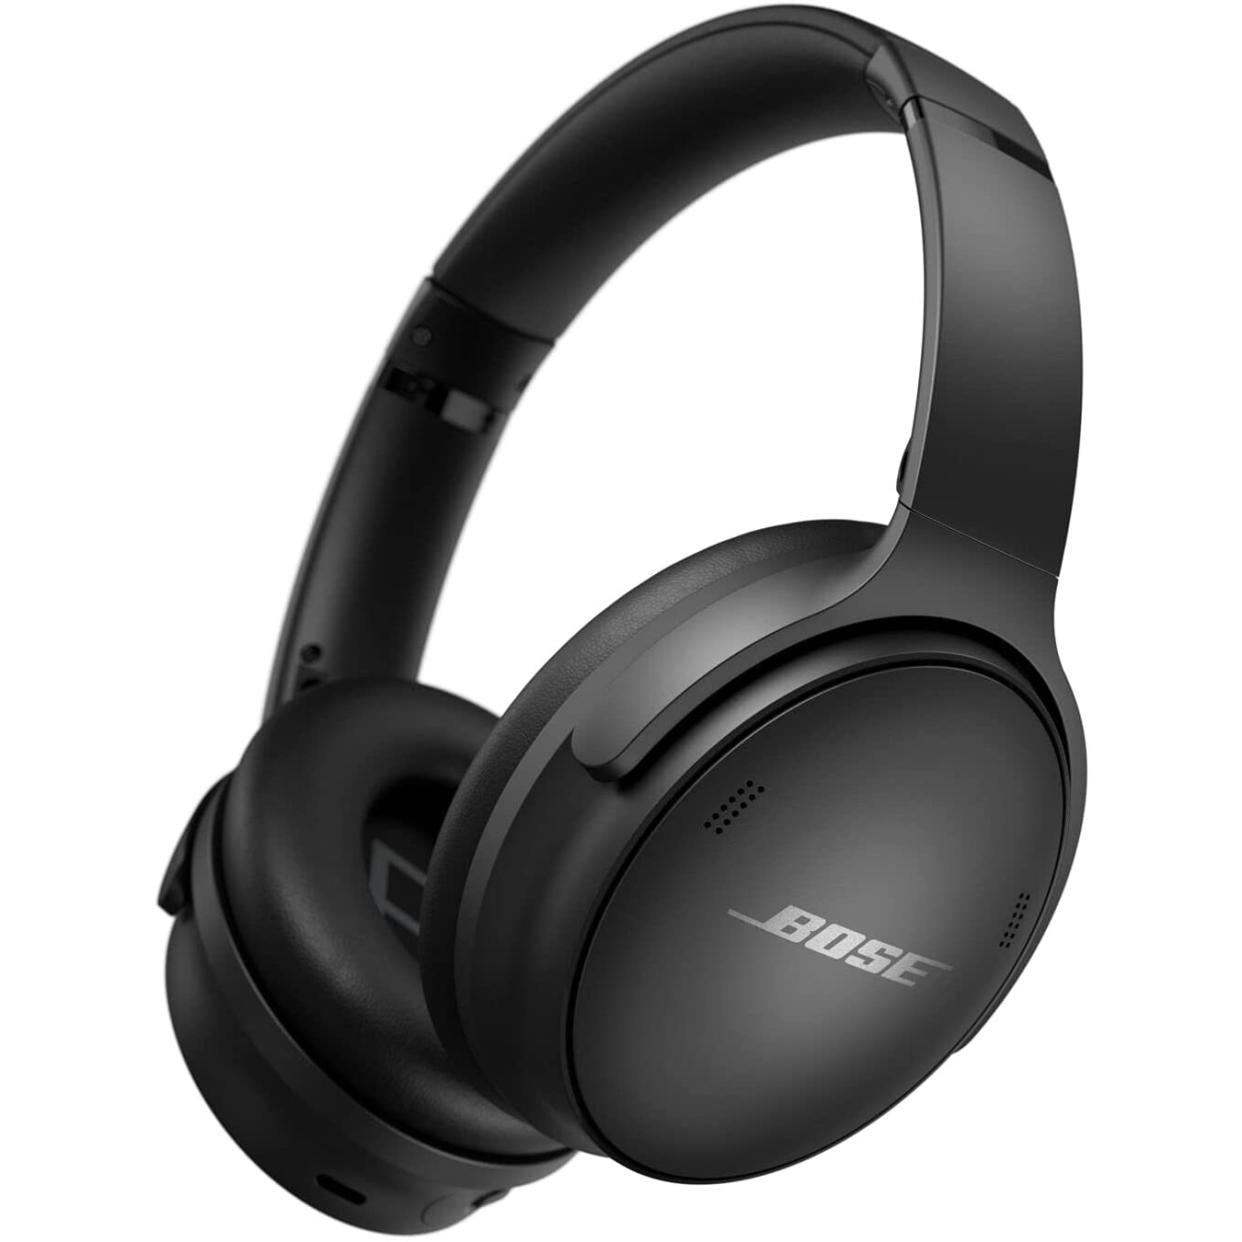 Bose QuietComfort headphones, gifts for dads